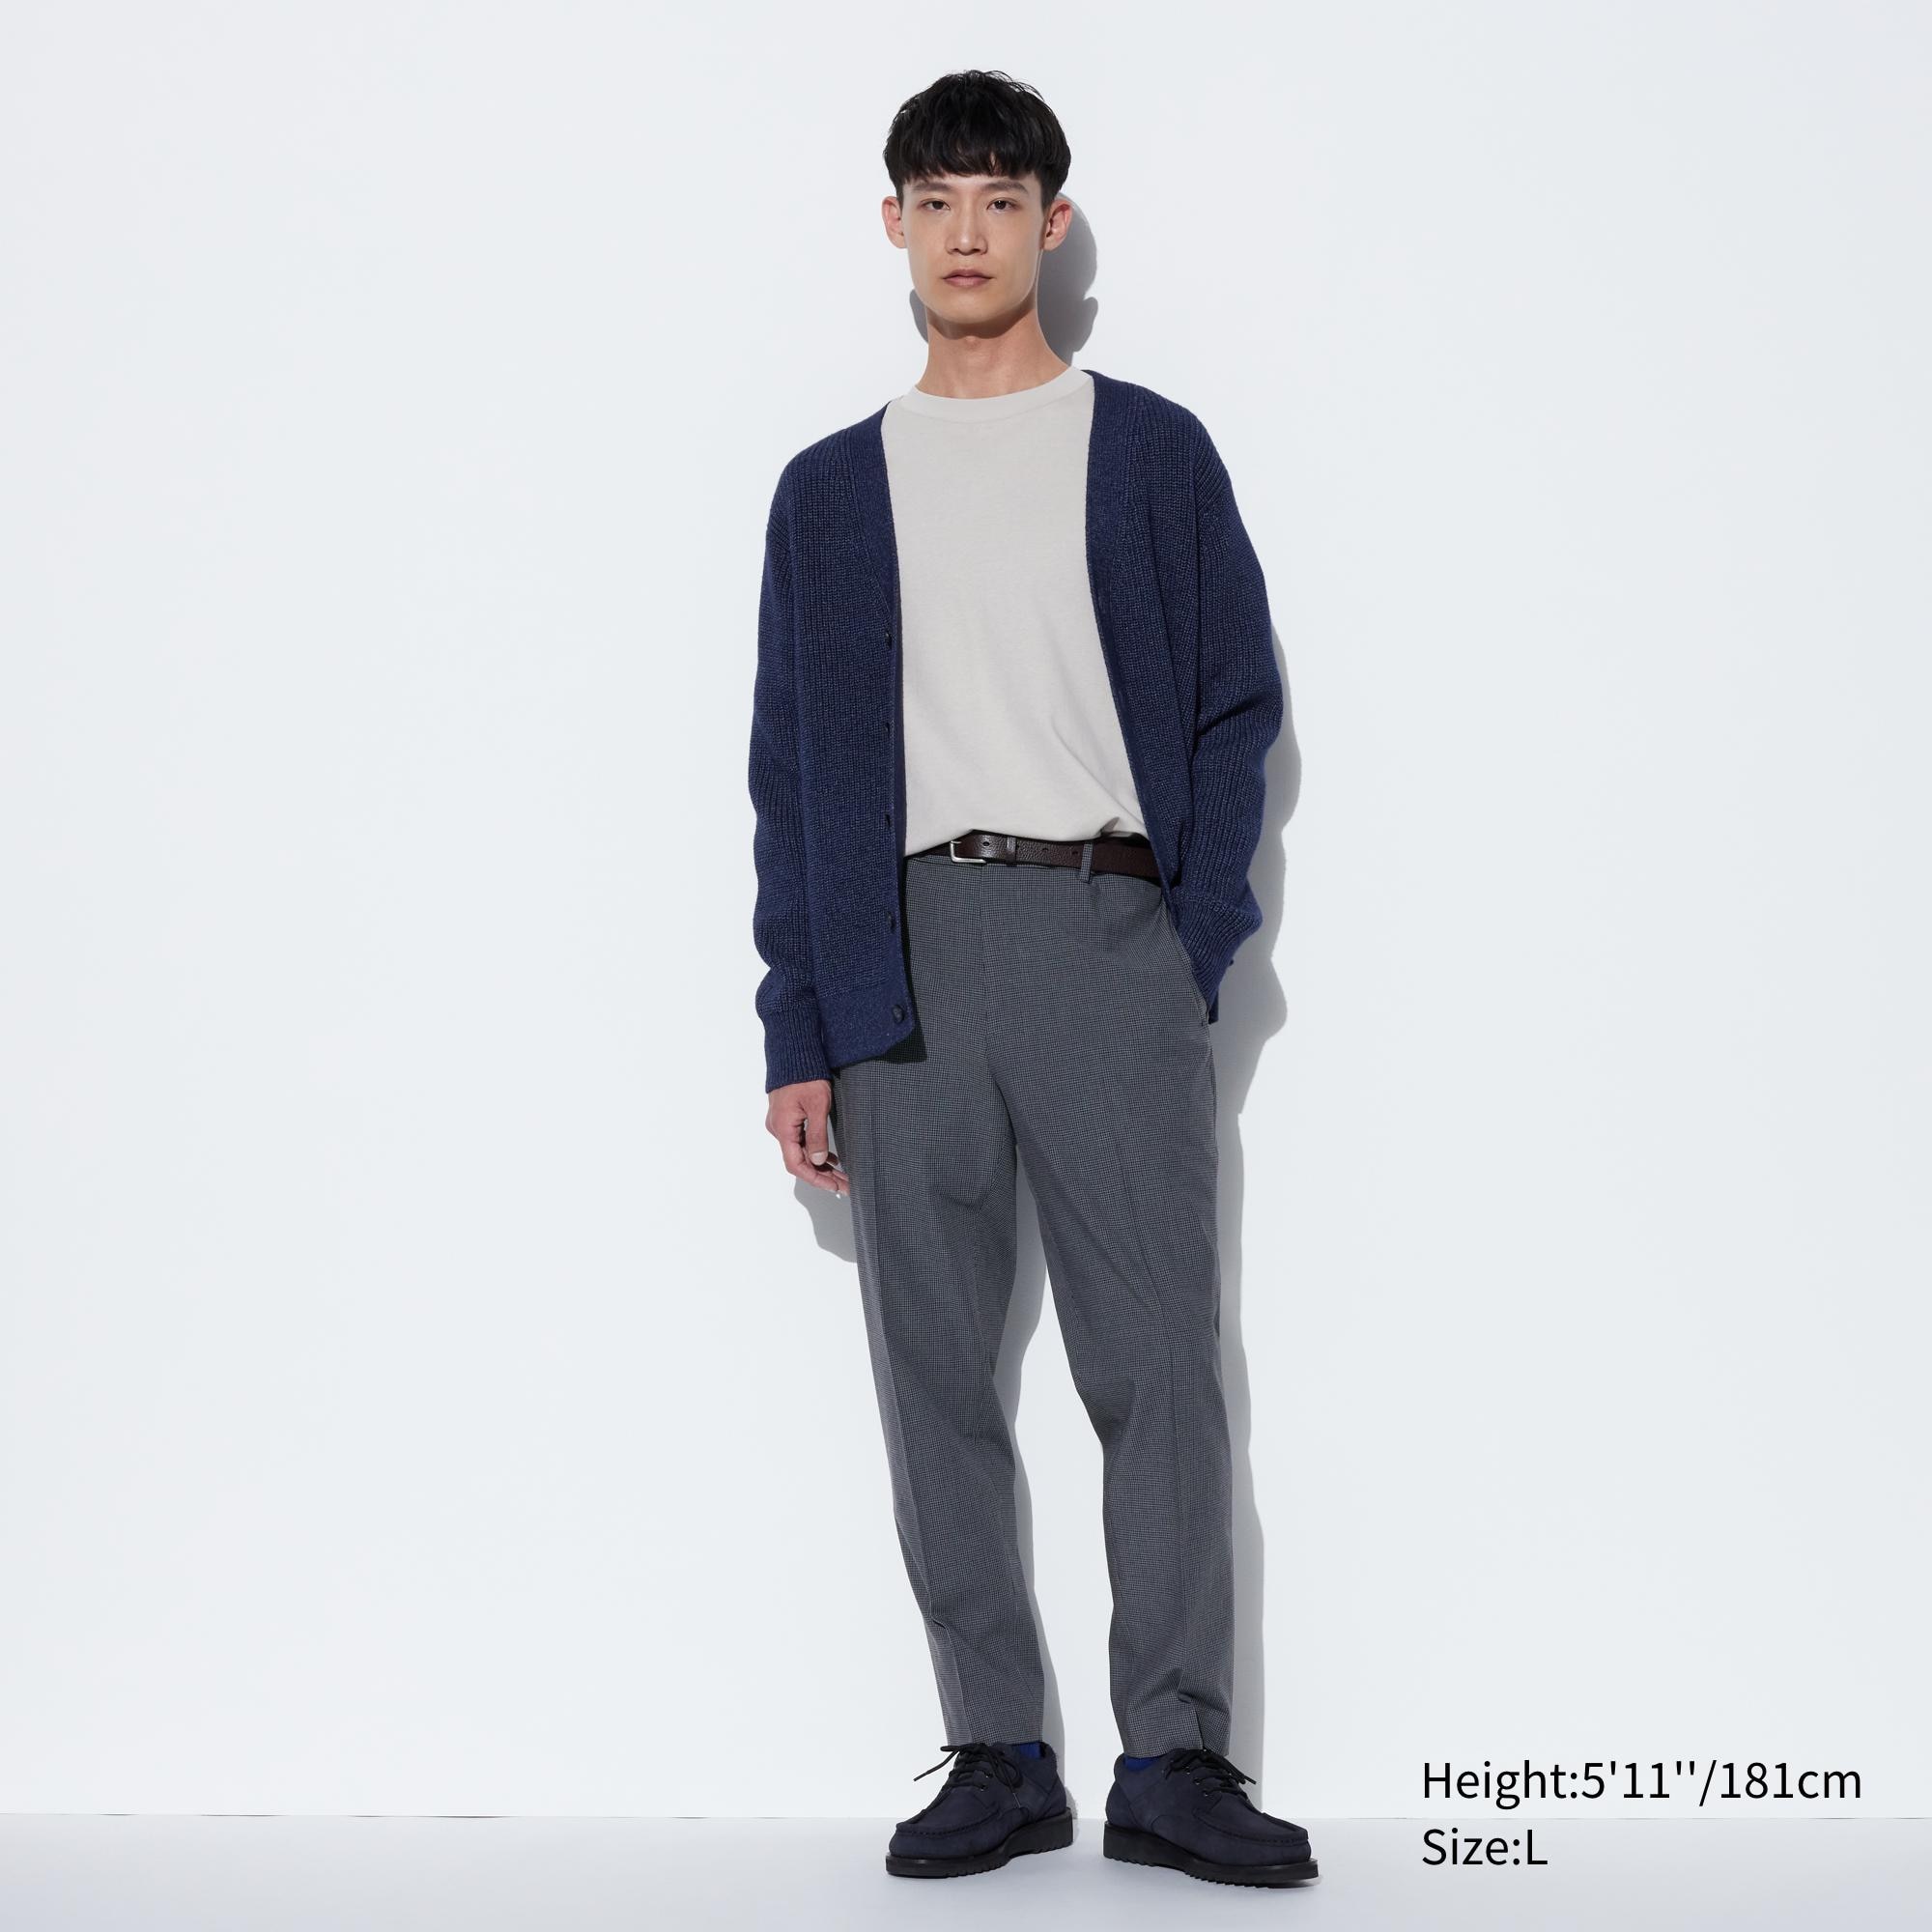 Slim Fit Cotton twill trousers - Khaki green - Men | H&M IN